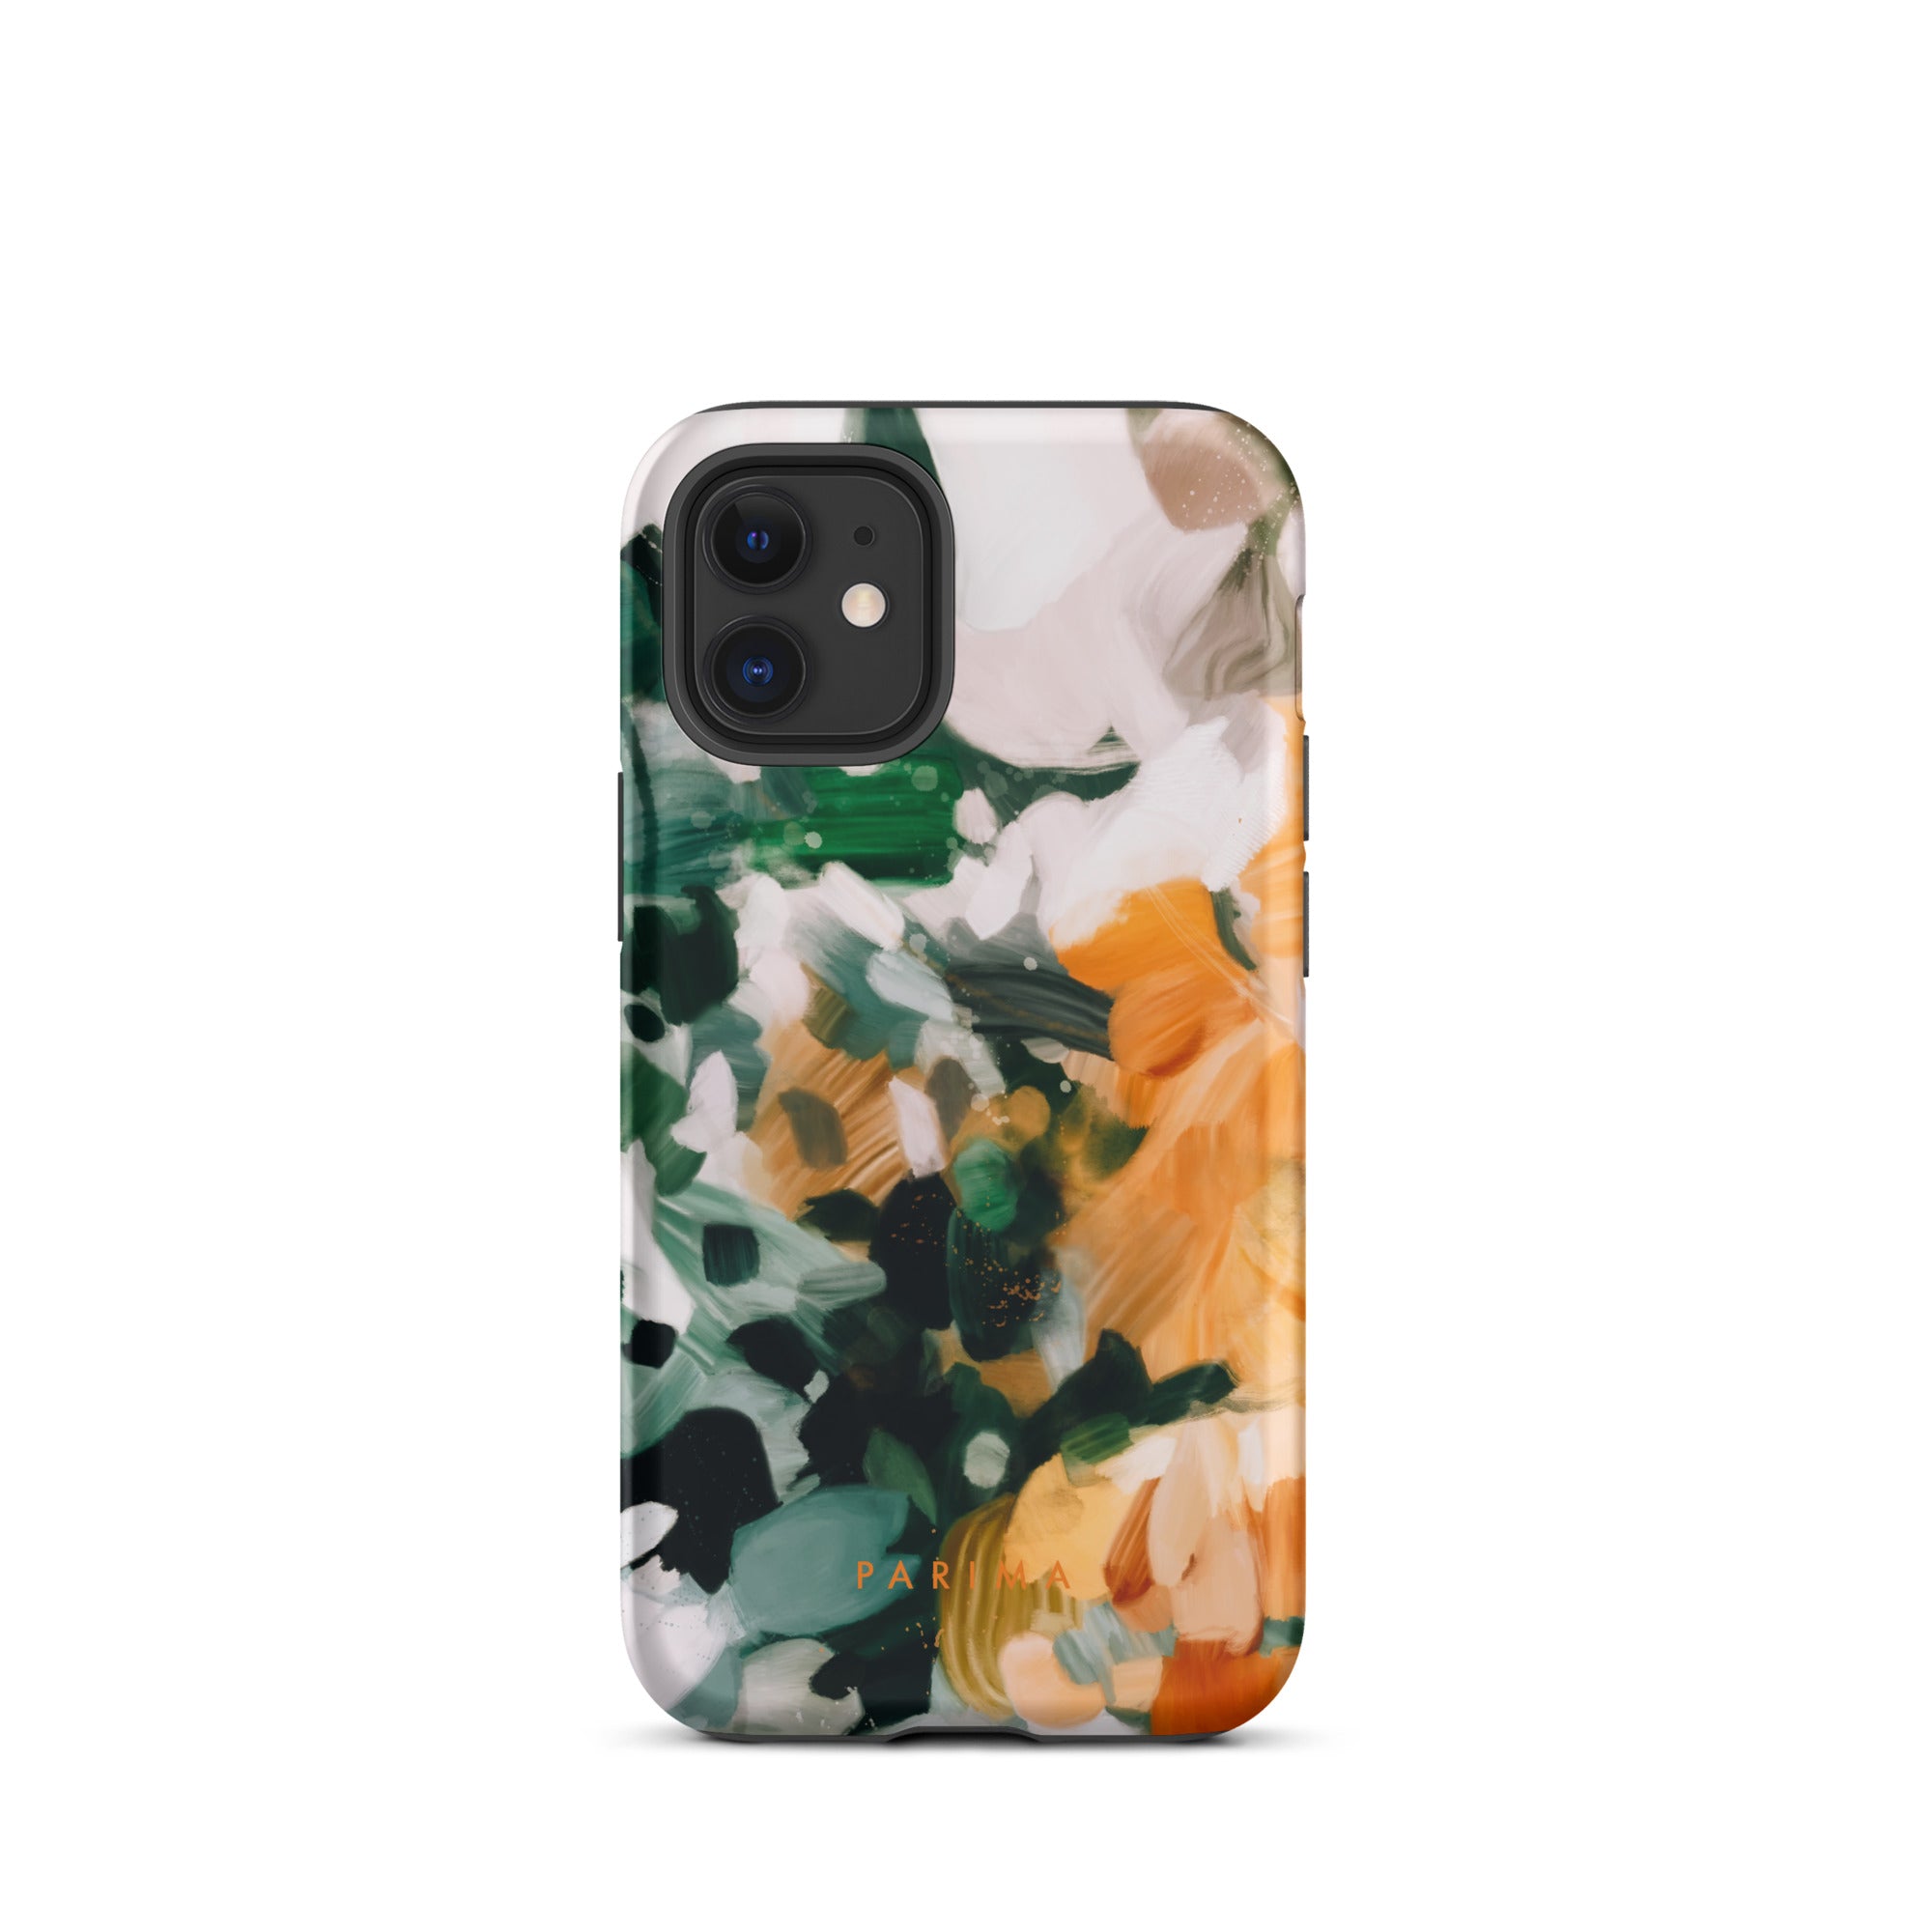 Aspen, green and orange abstract art - iPhone 12 Mini tough case by Parima Studio